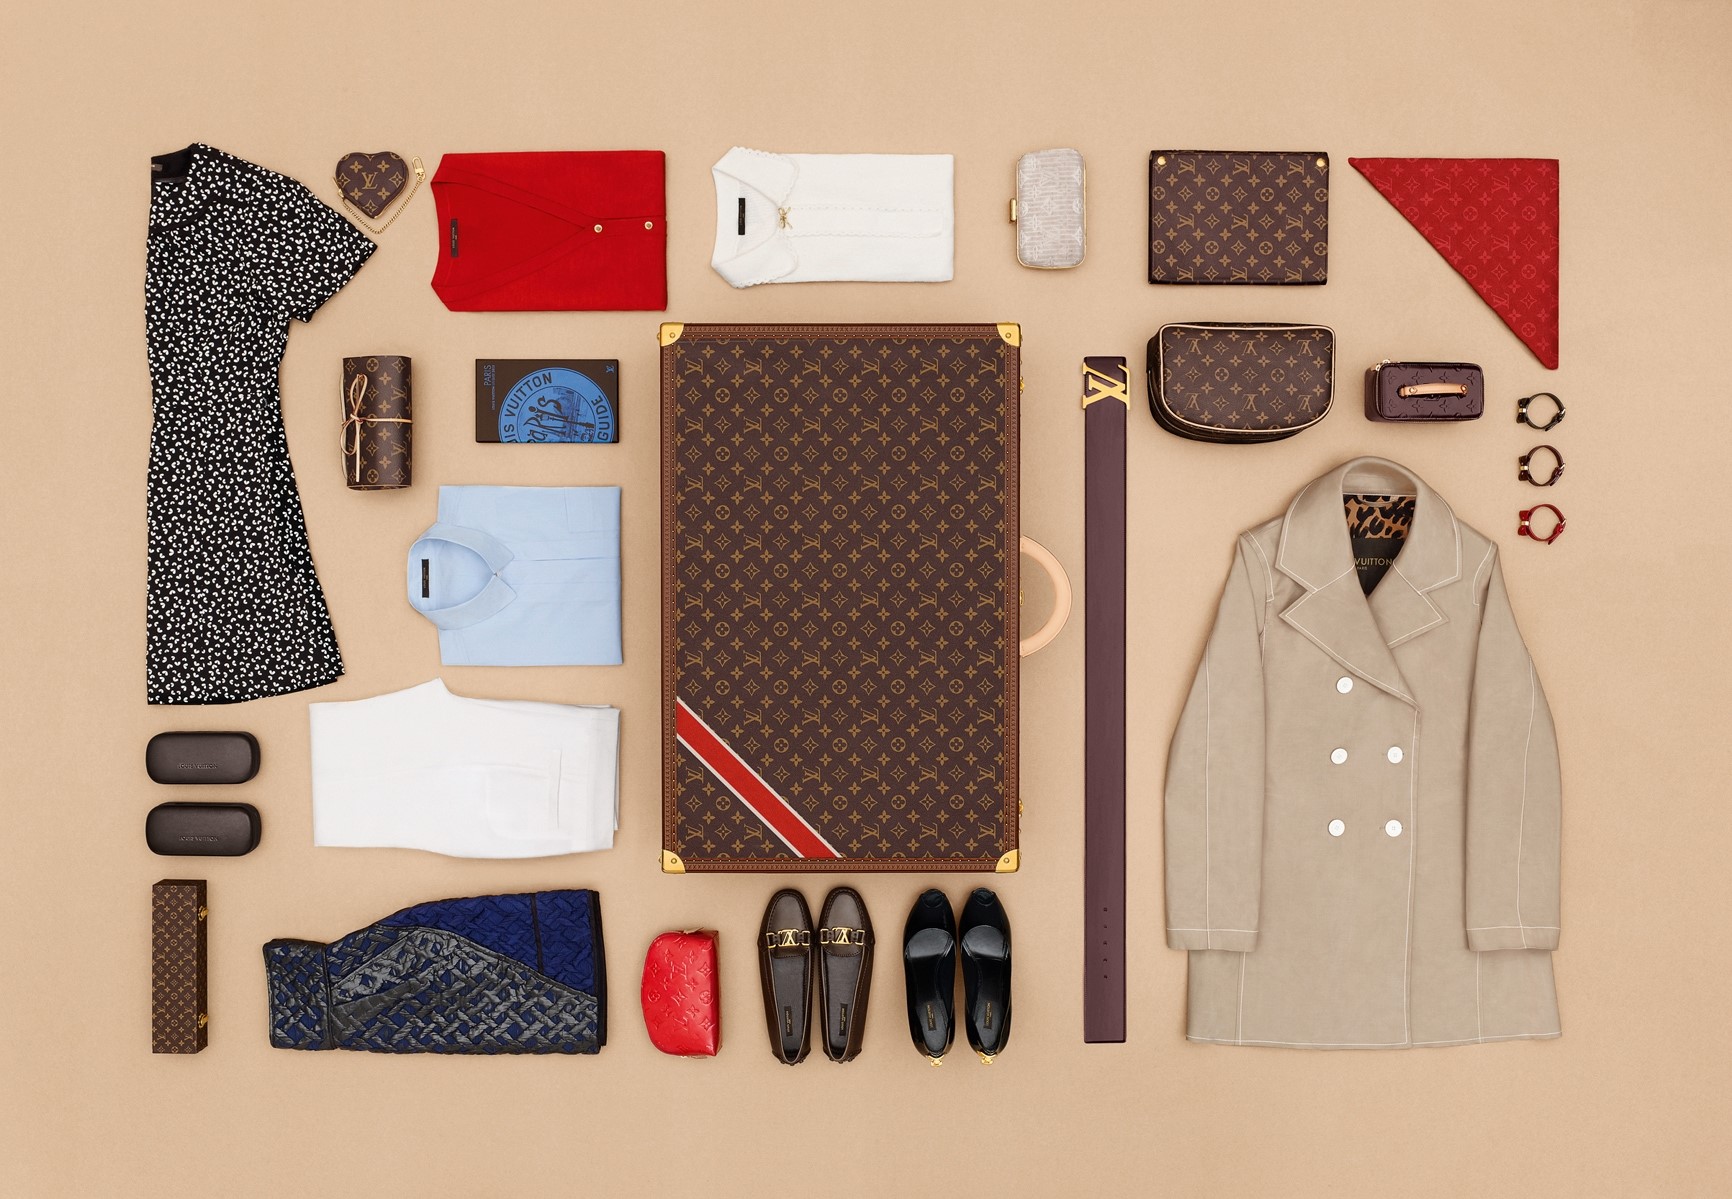 displayhunter: Louis Vuitton: The Art of Packing